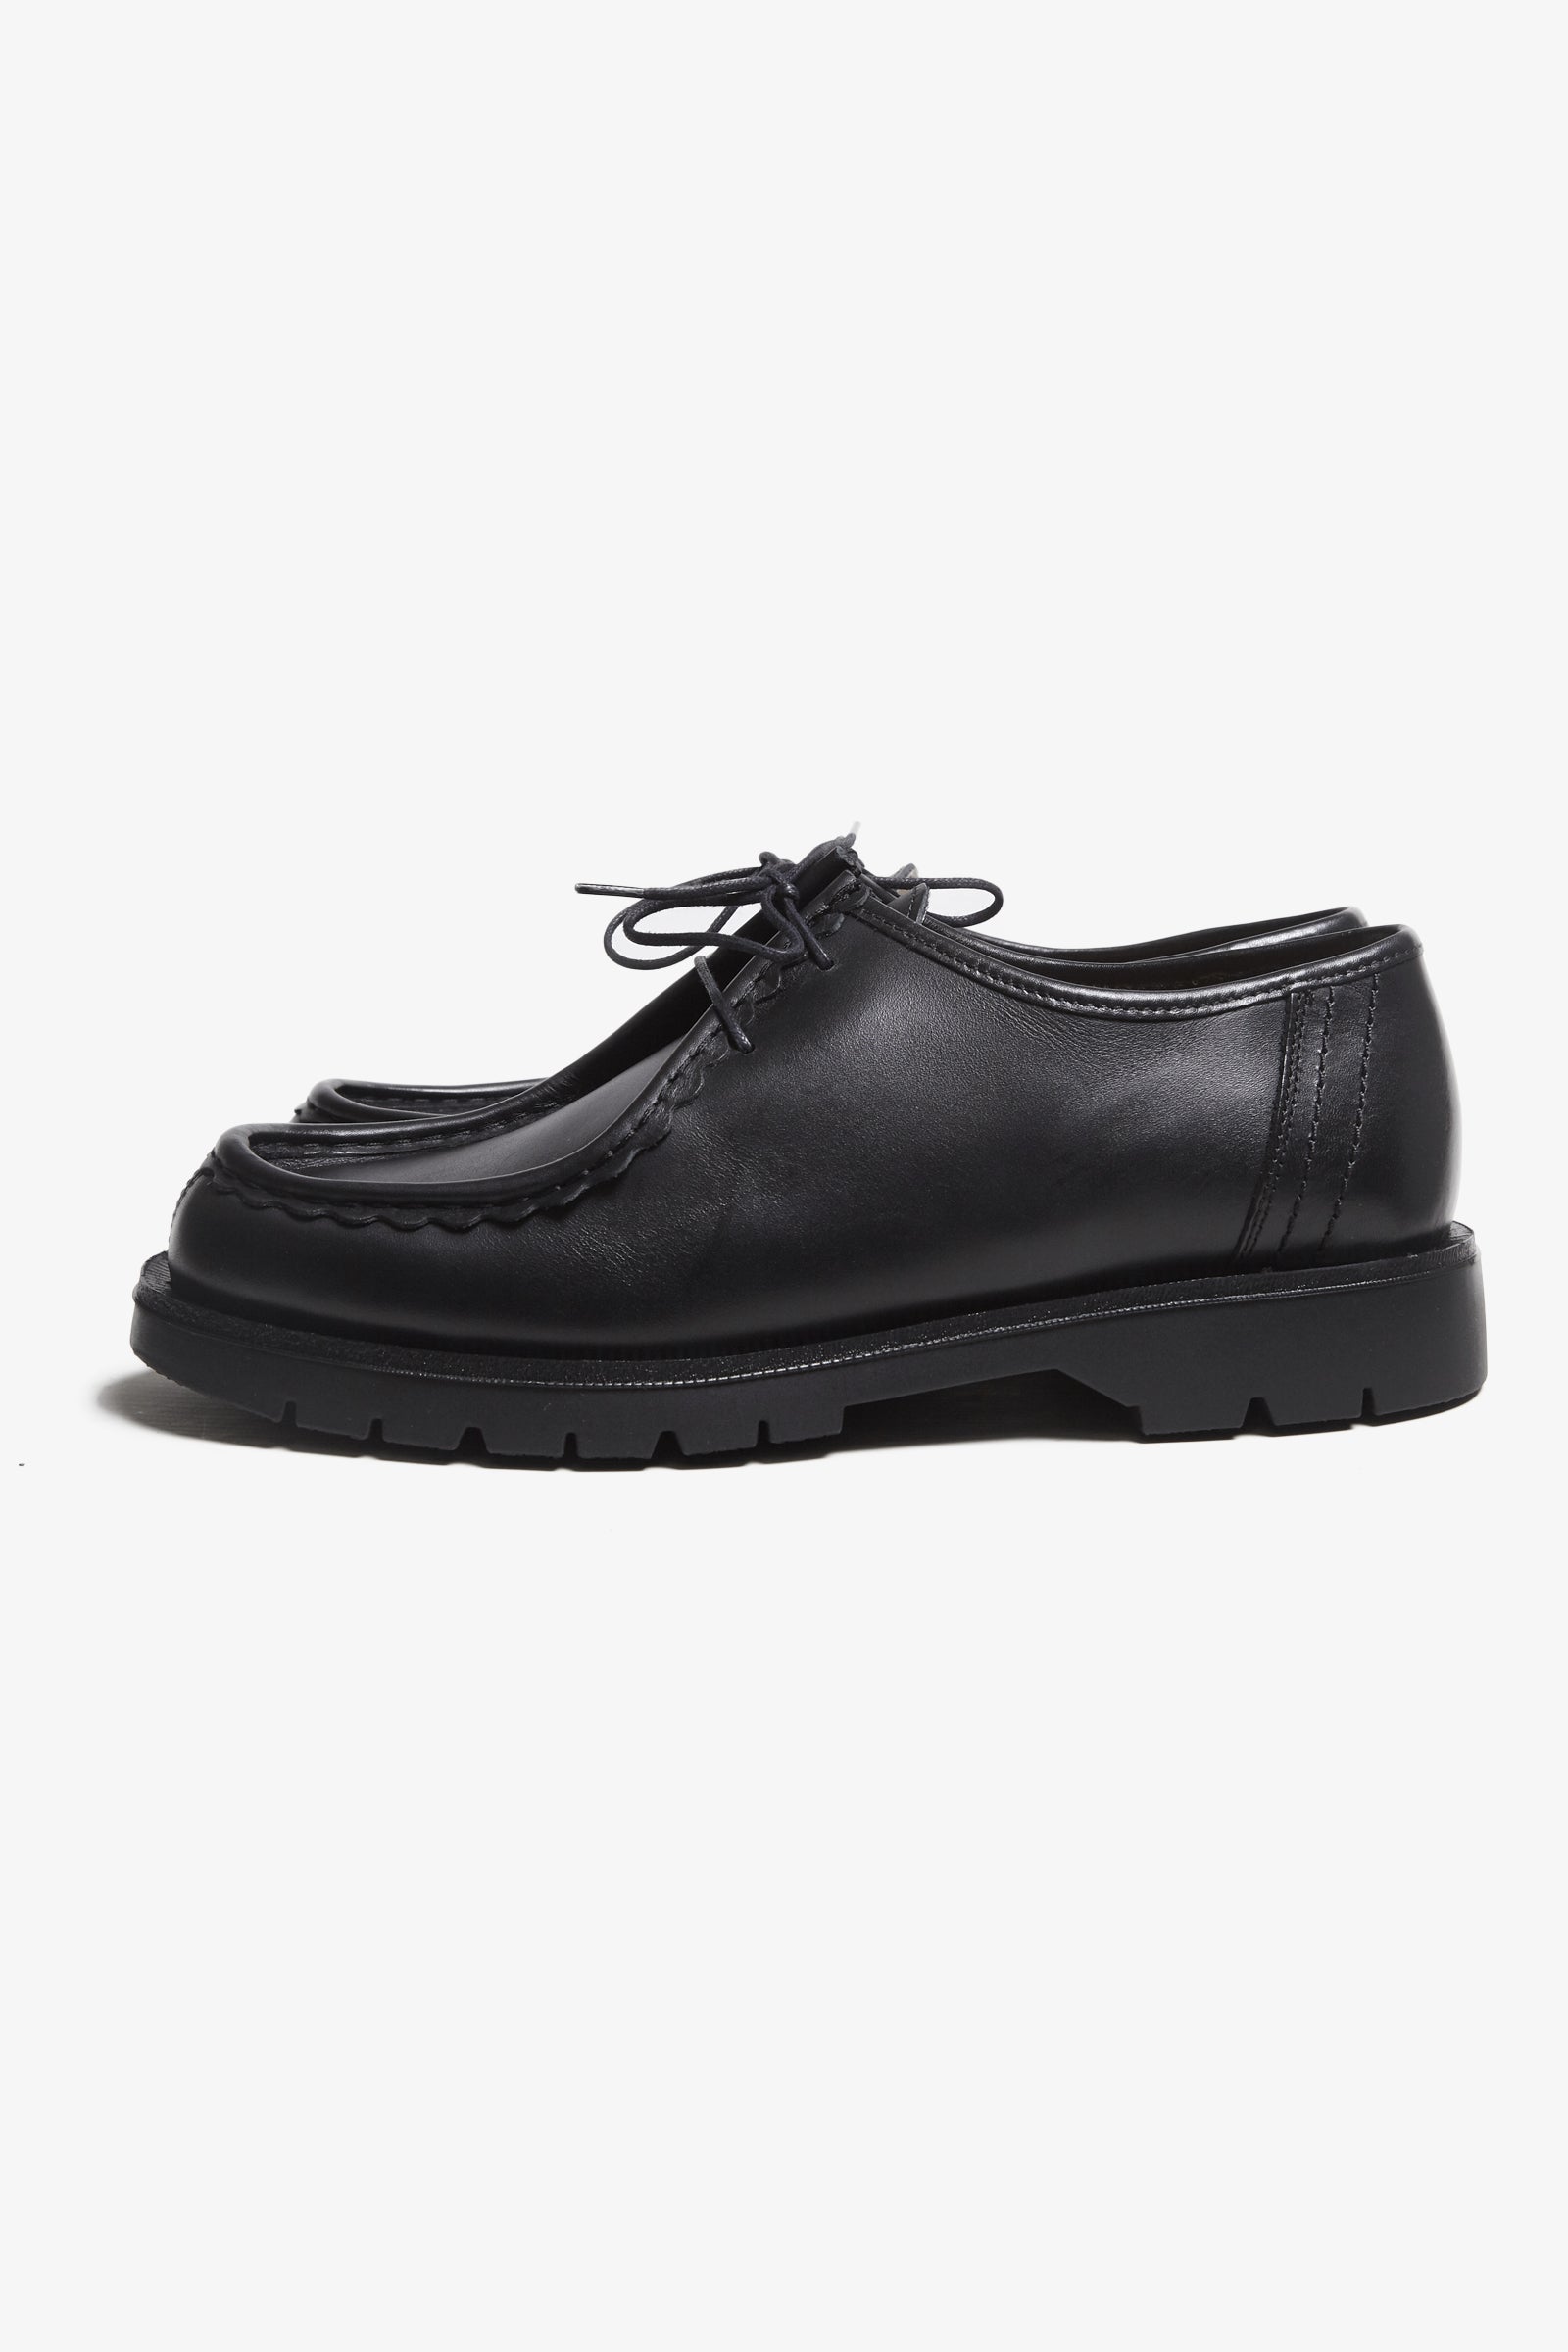 Kleman - Padror Moc Toe Shoe - Black